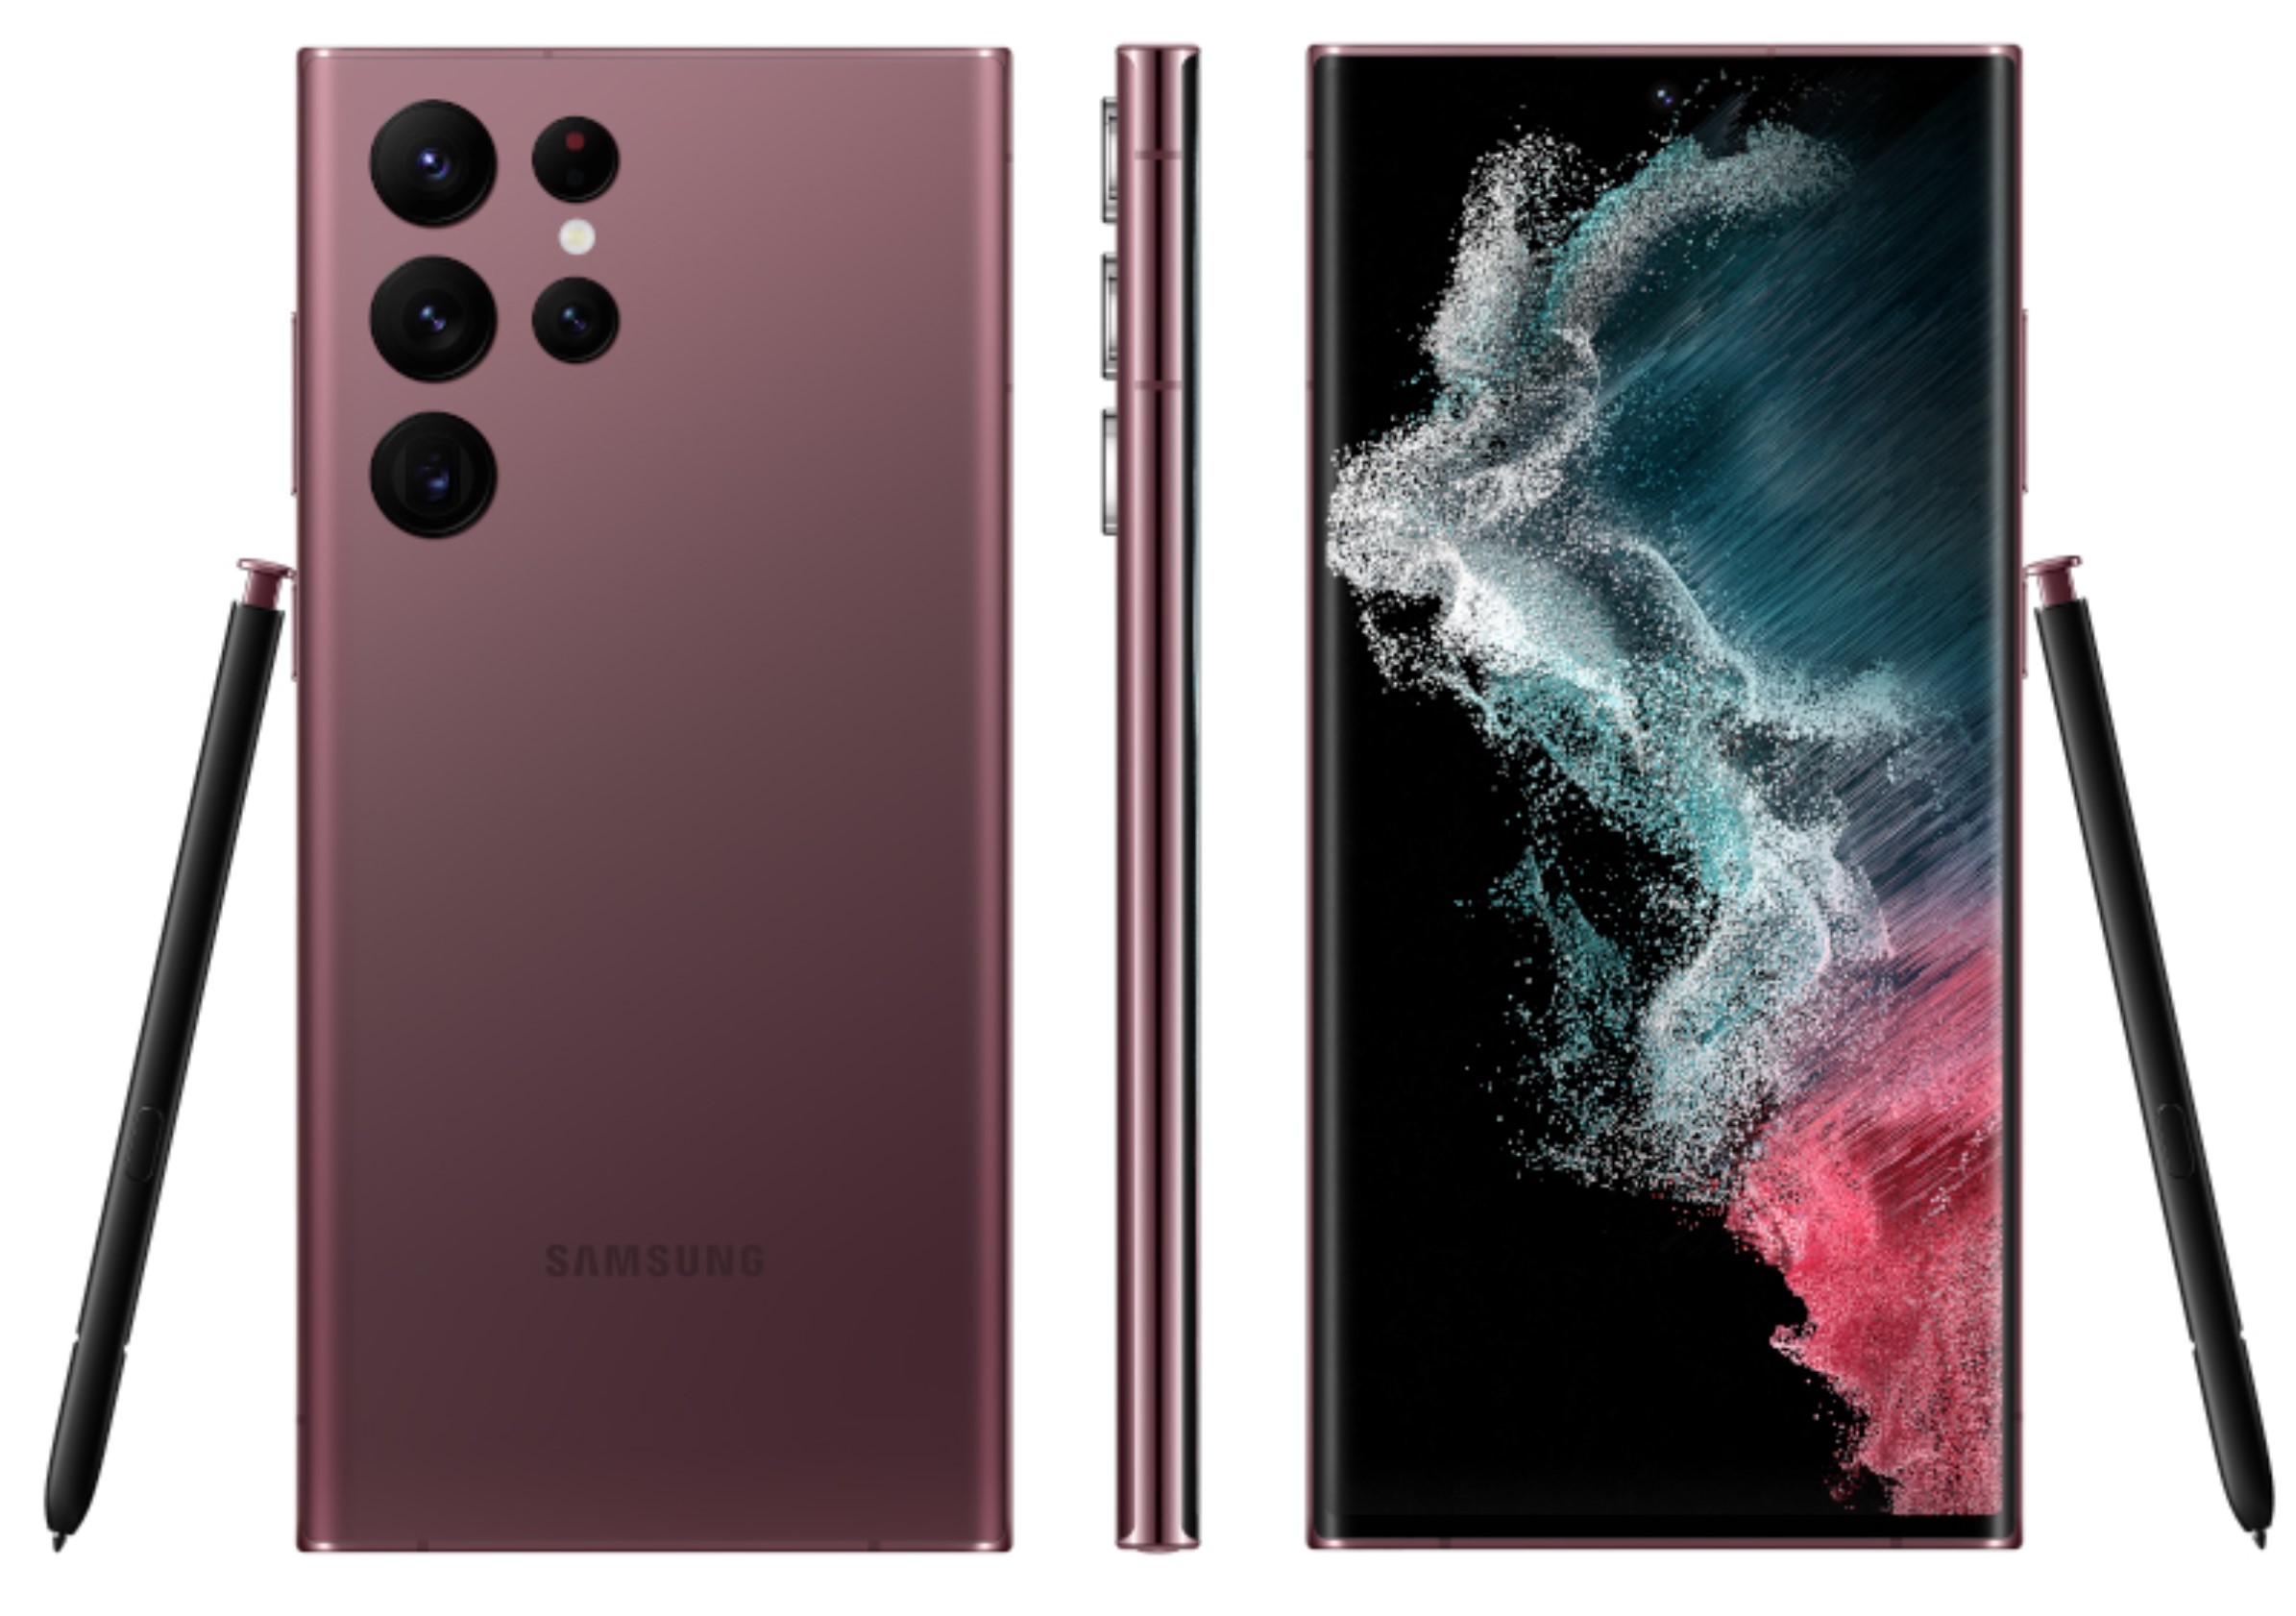 Samsung-Galaxy-S22-Ultra-official-render.jpg